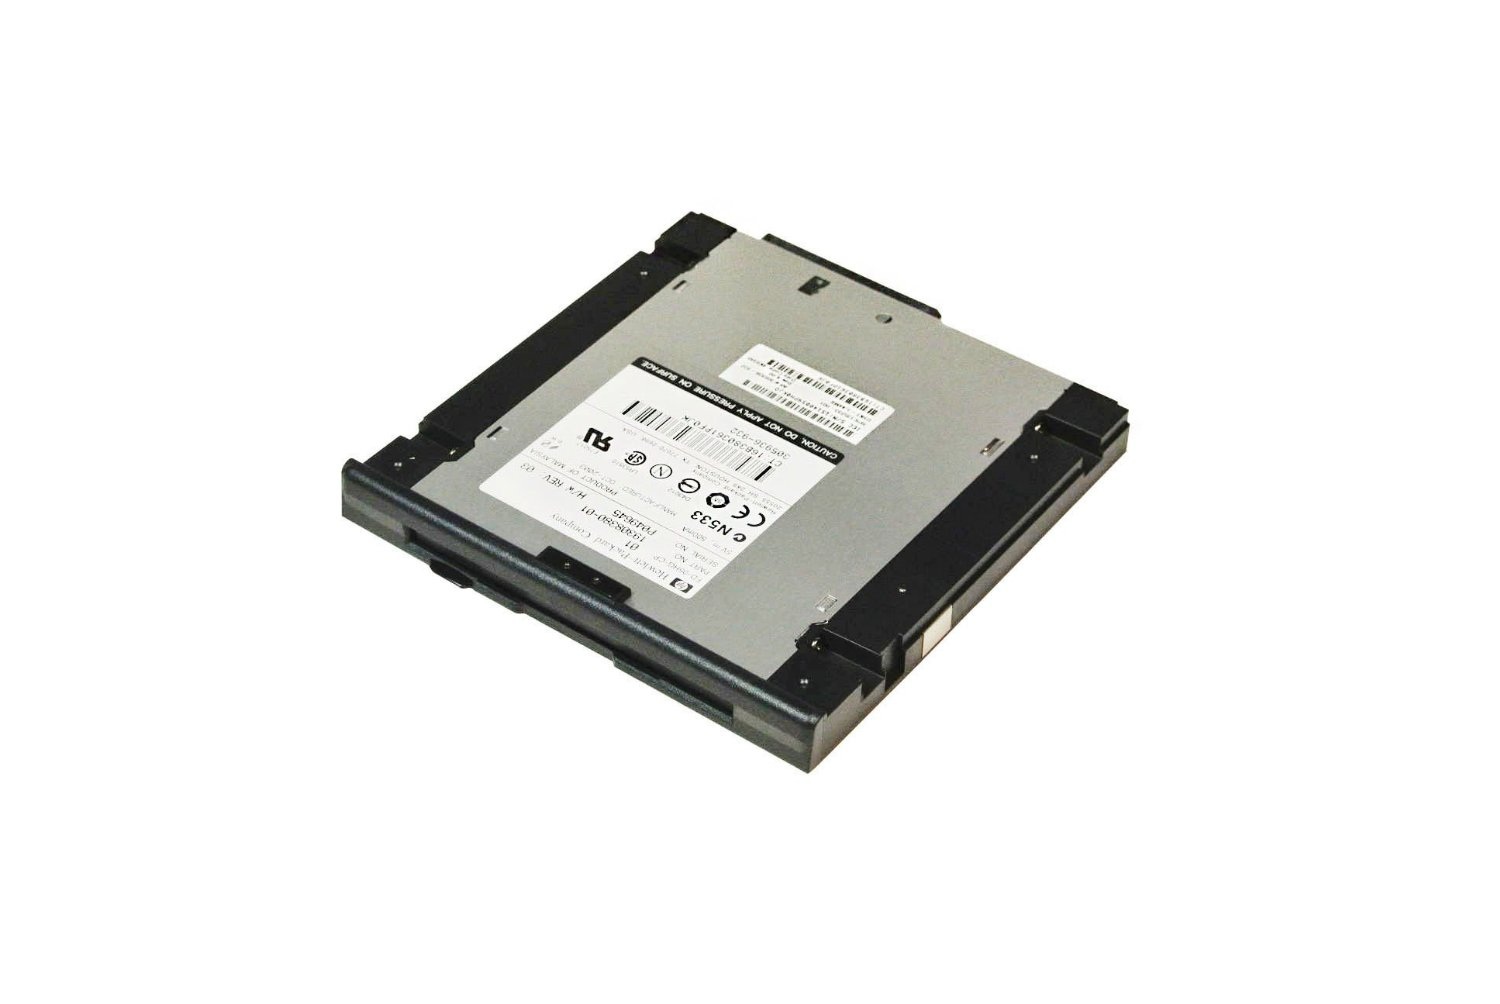 241995-001 | HP Notebook Floppy Drive 1.44 MB 3.5 MultiBay